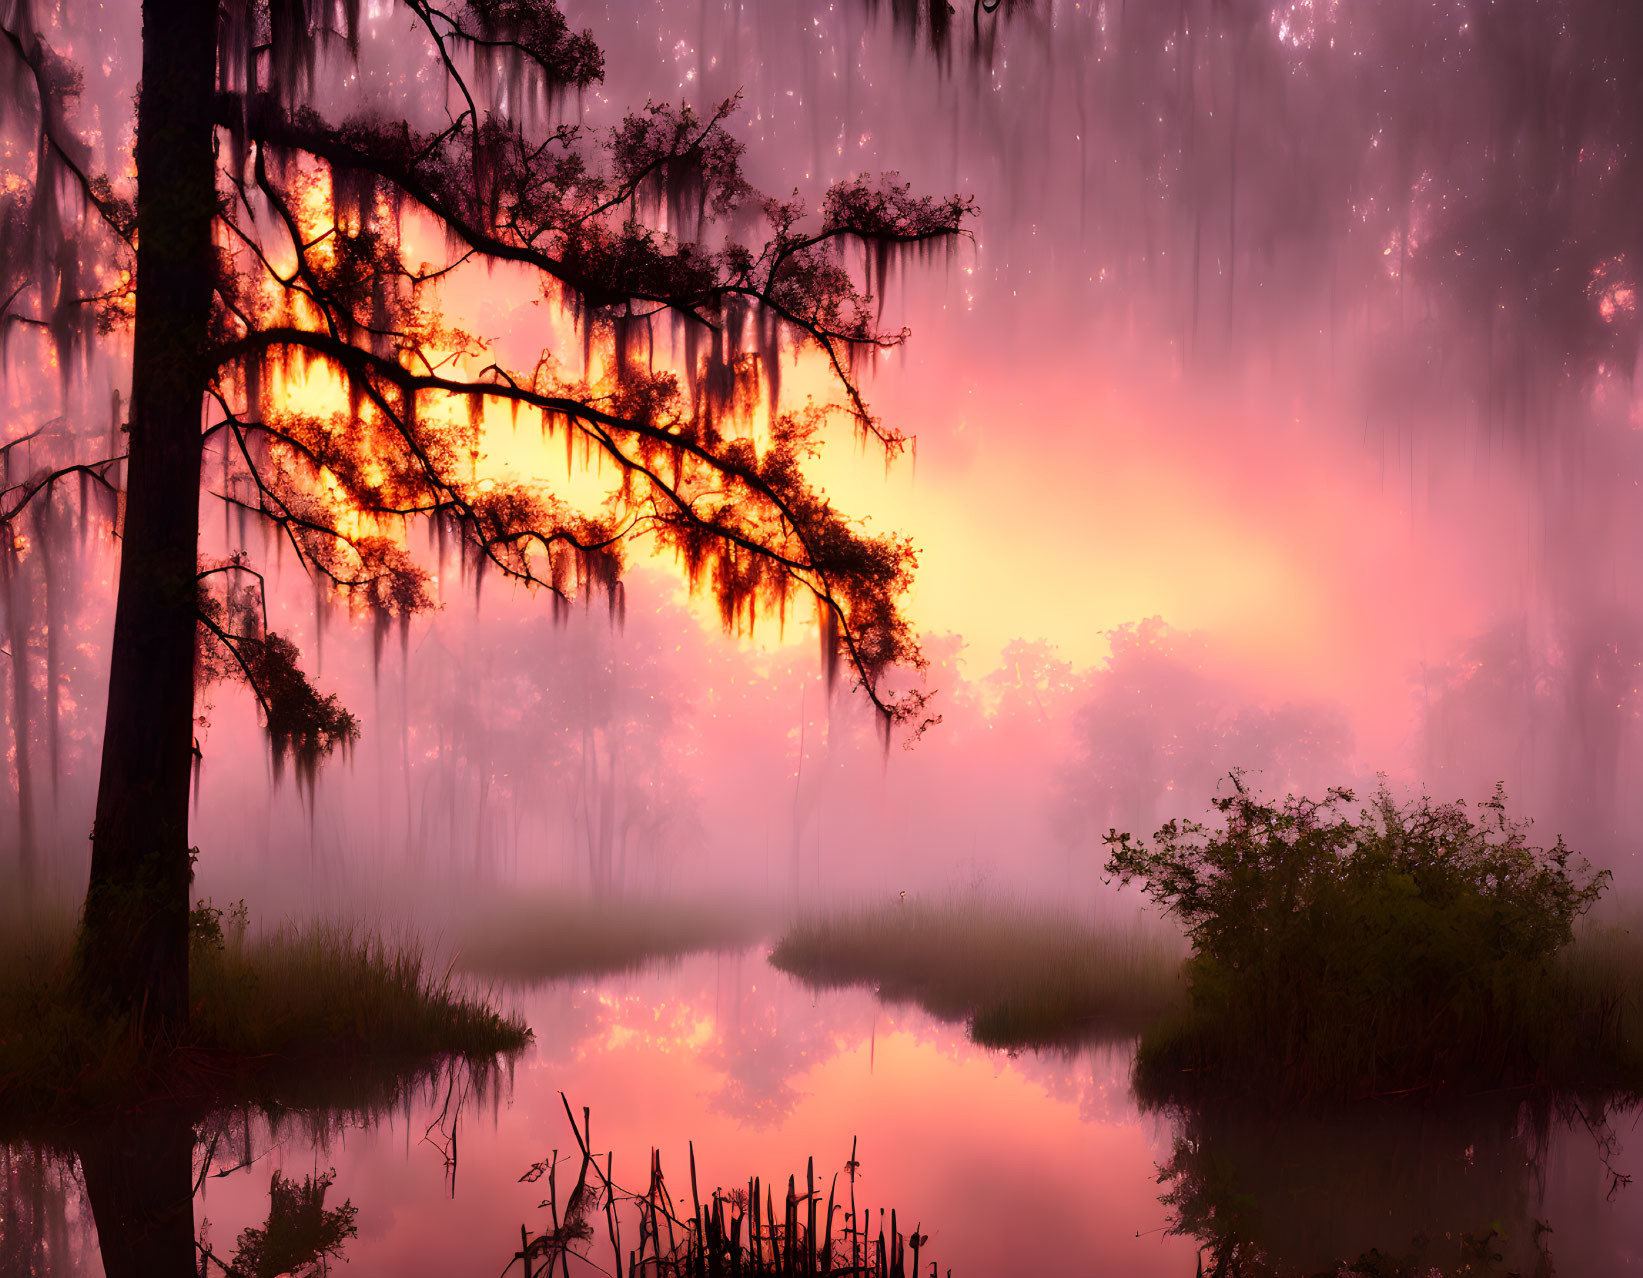 Misty Wetland Sunrise: Pink and Orange Reflections on Water